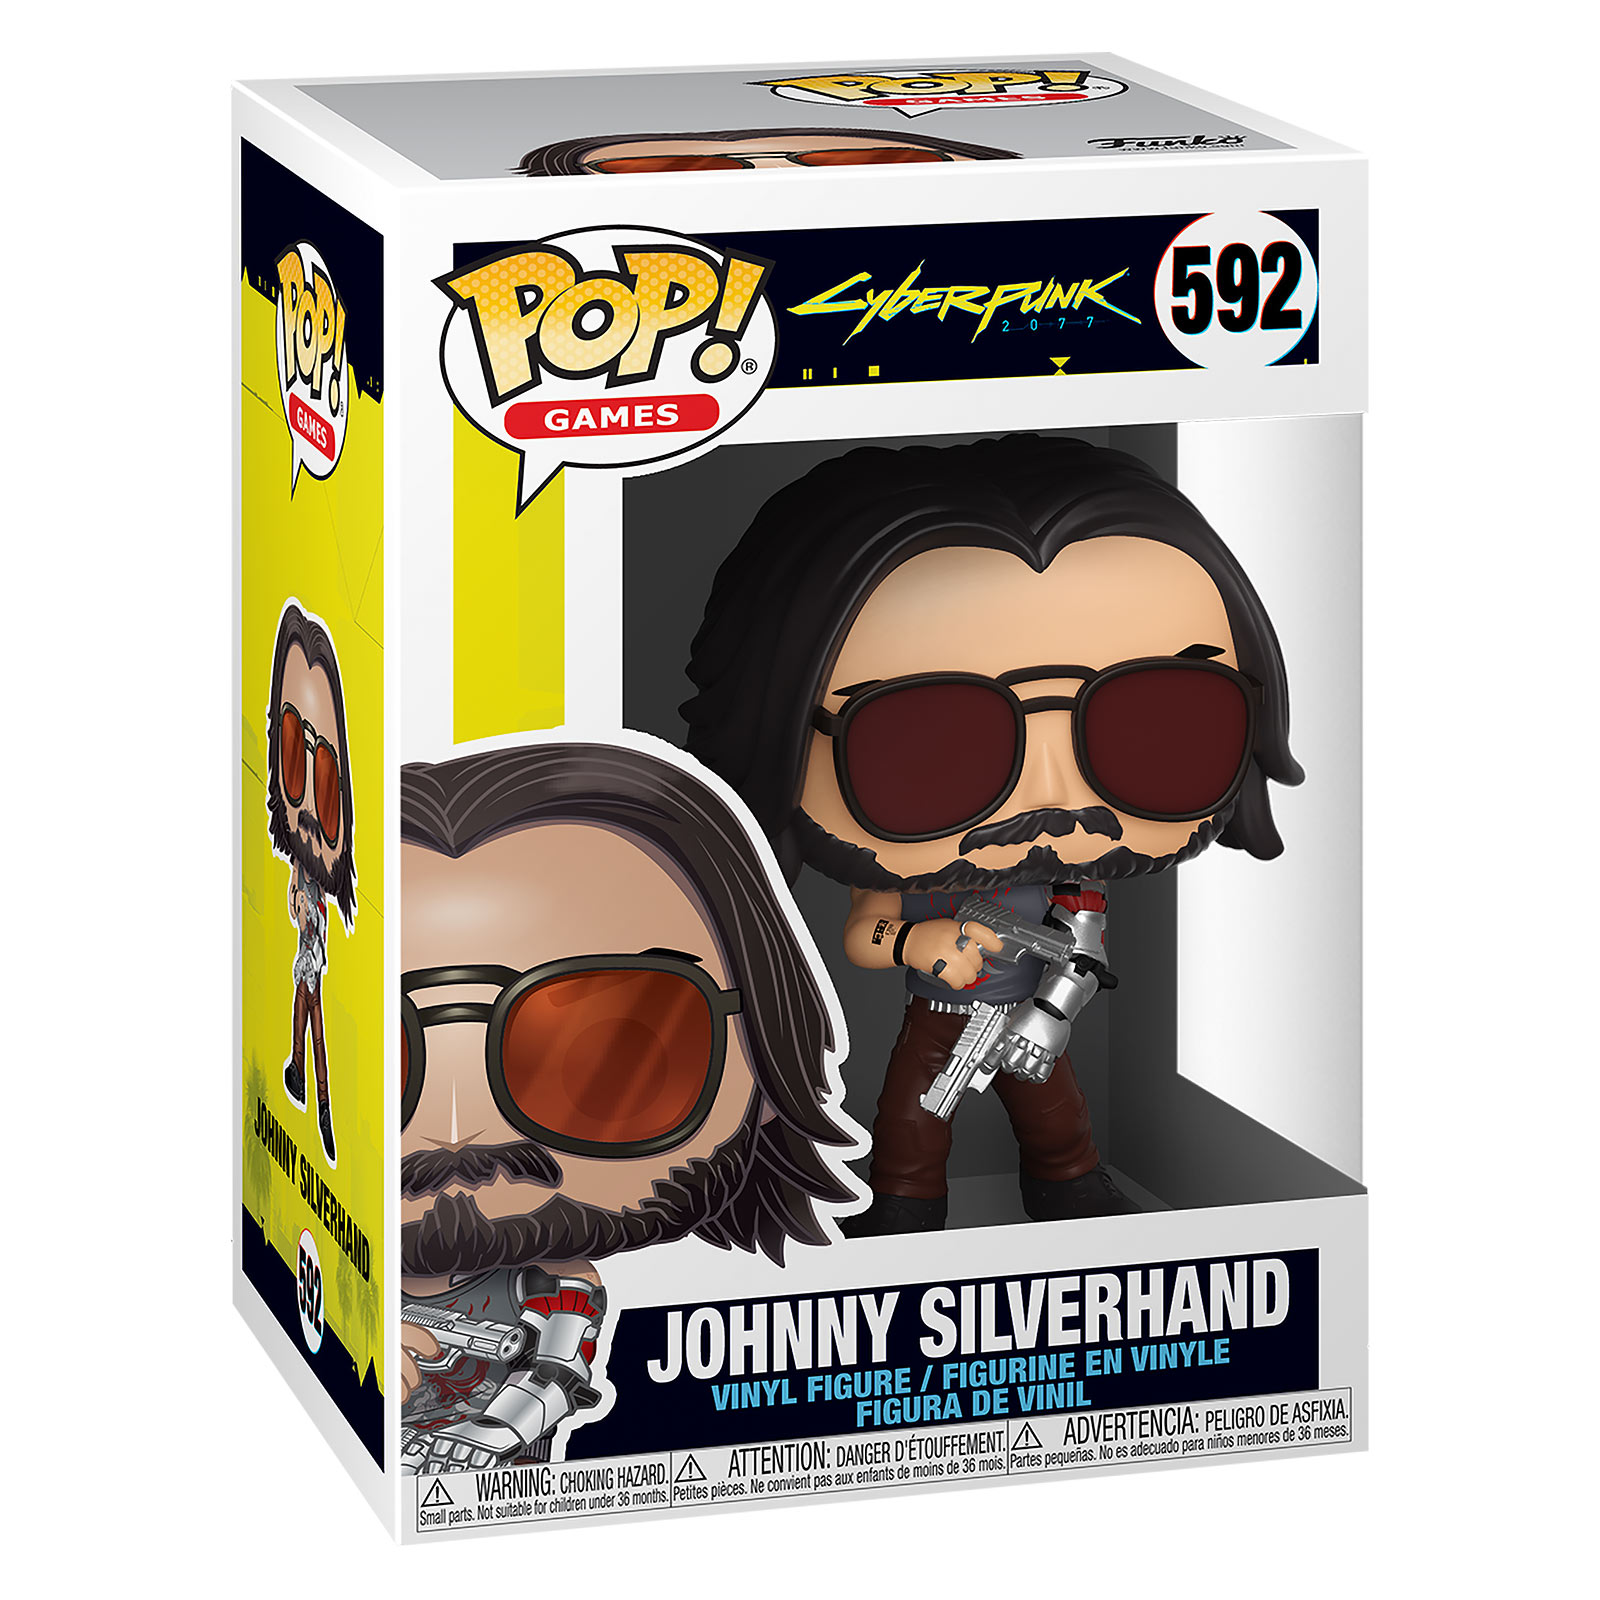 Cyberpunk 2077 - Johnny Silverhand with Weapon Funko Pop Figure